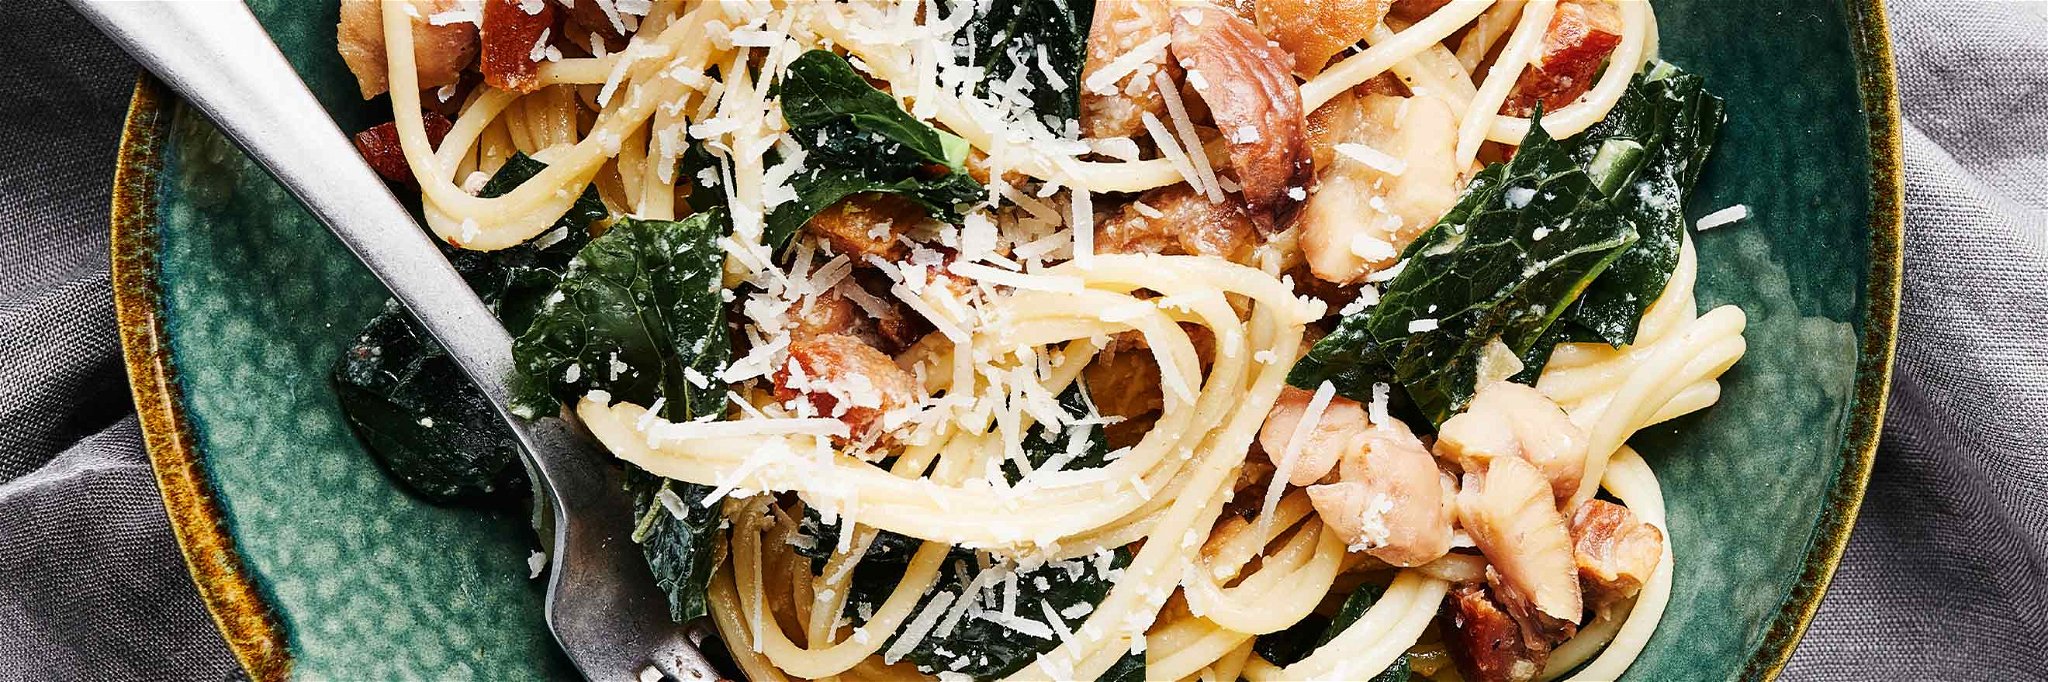 Spaghetti Carbonara mit Schwarzkohl und Marroni